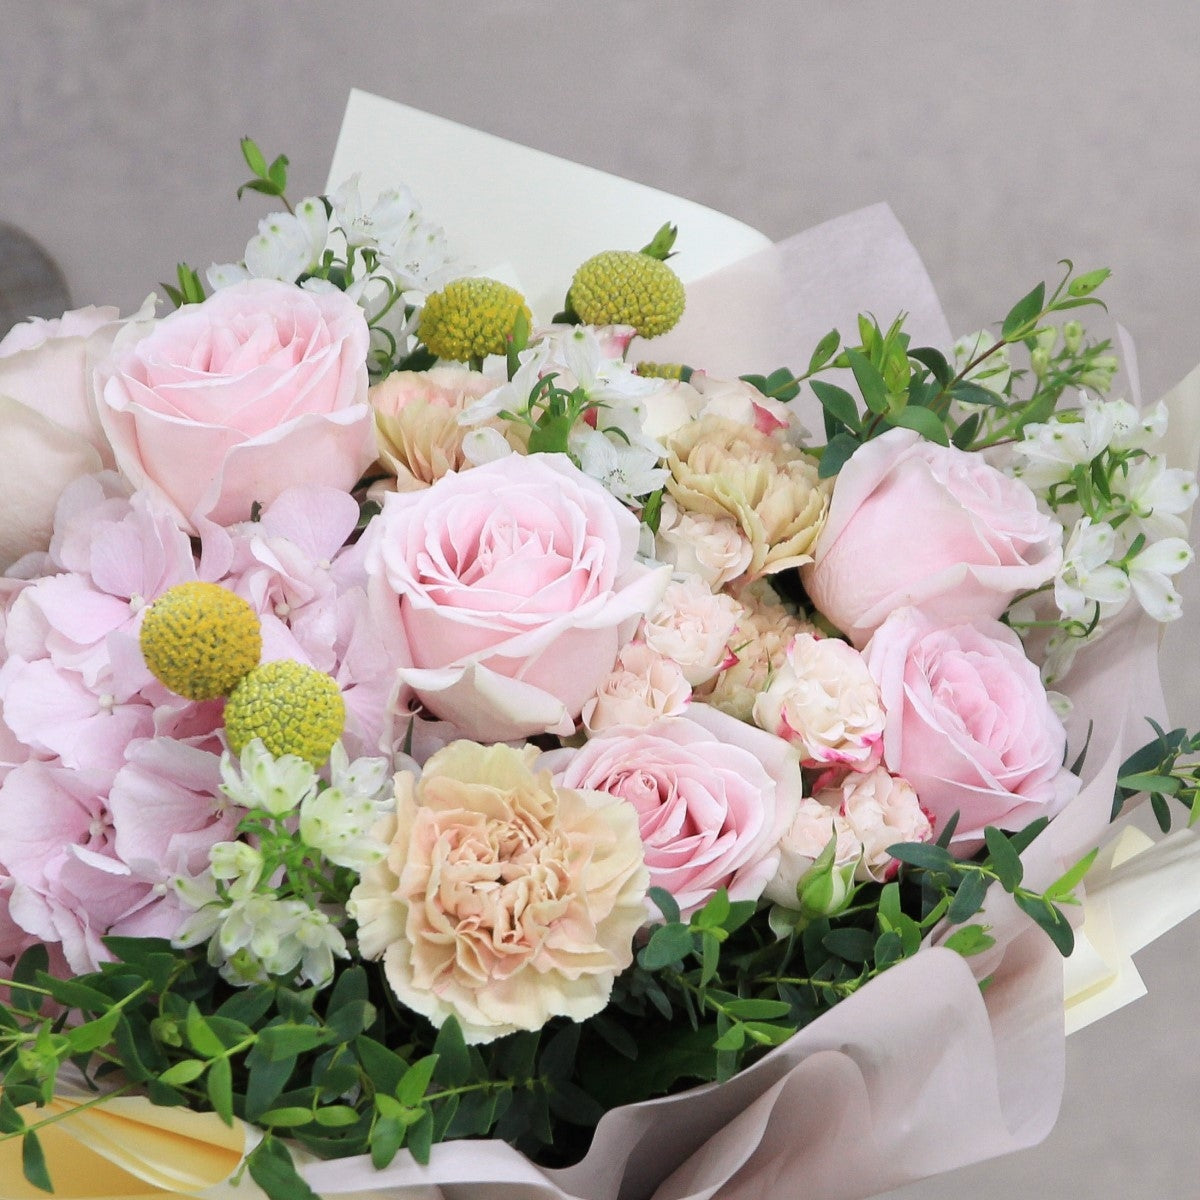 粉繡球康乃馨花束 Pink hydrangea and carnation bouquet